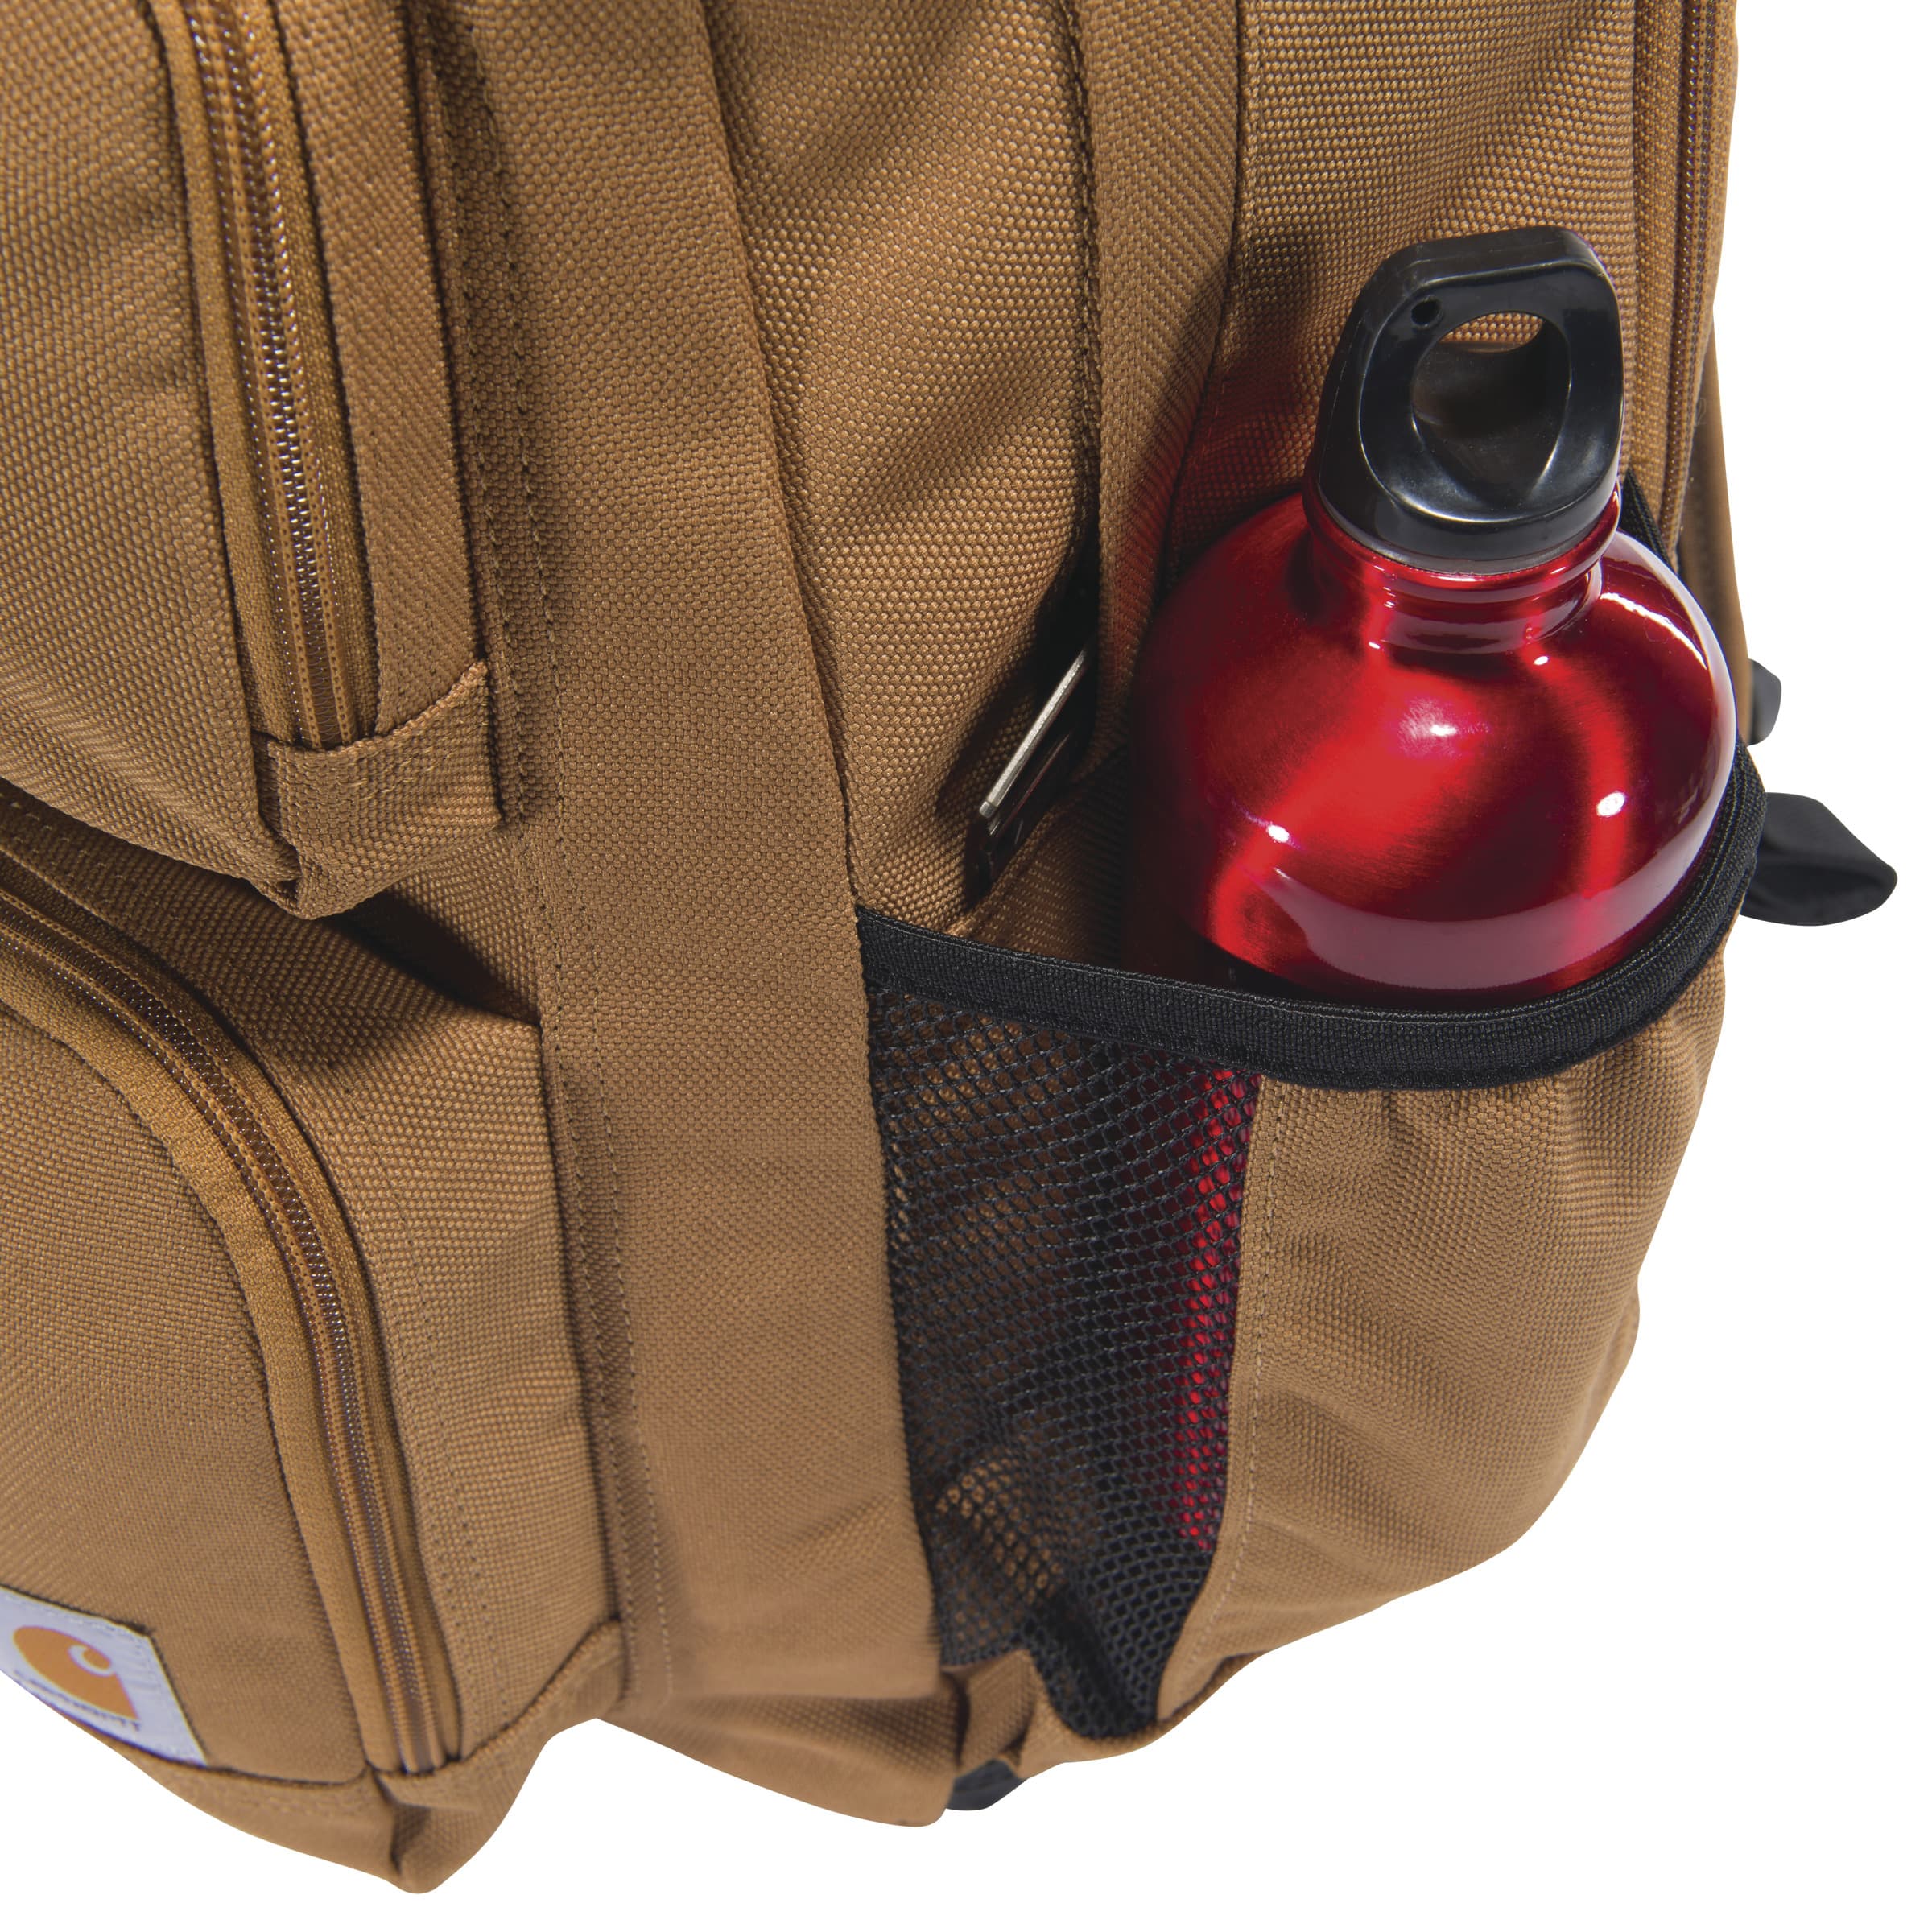 Carhartt® Dual-Compartment 28L Backpack - Carhartt Brown